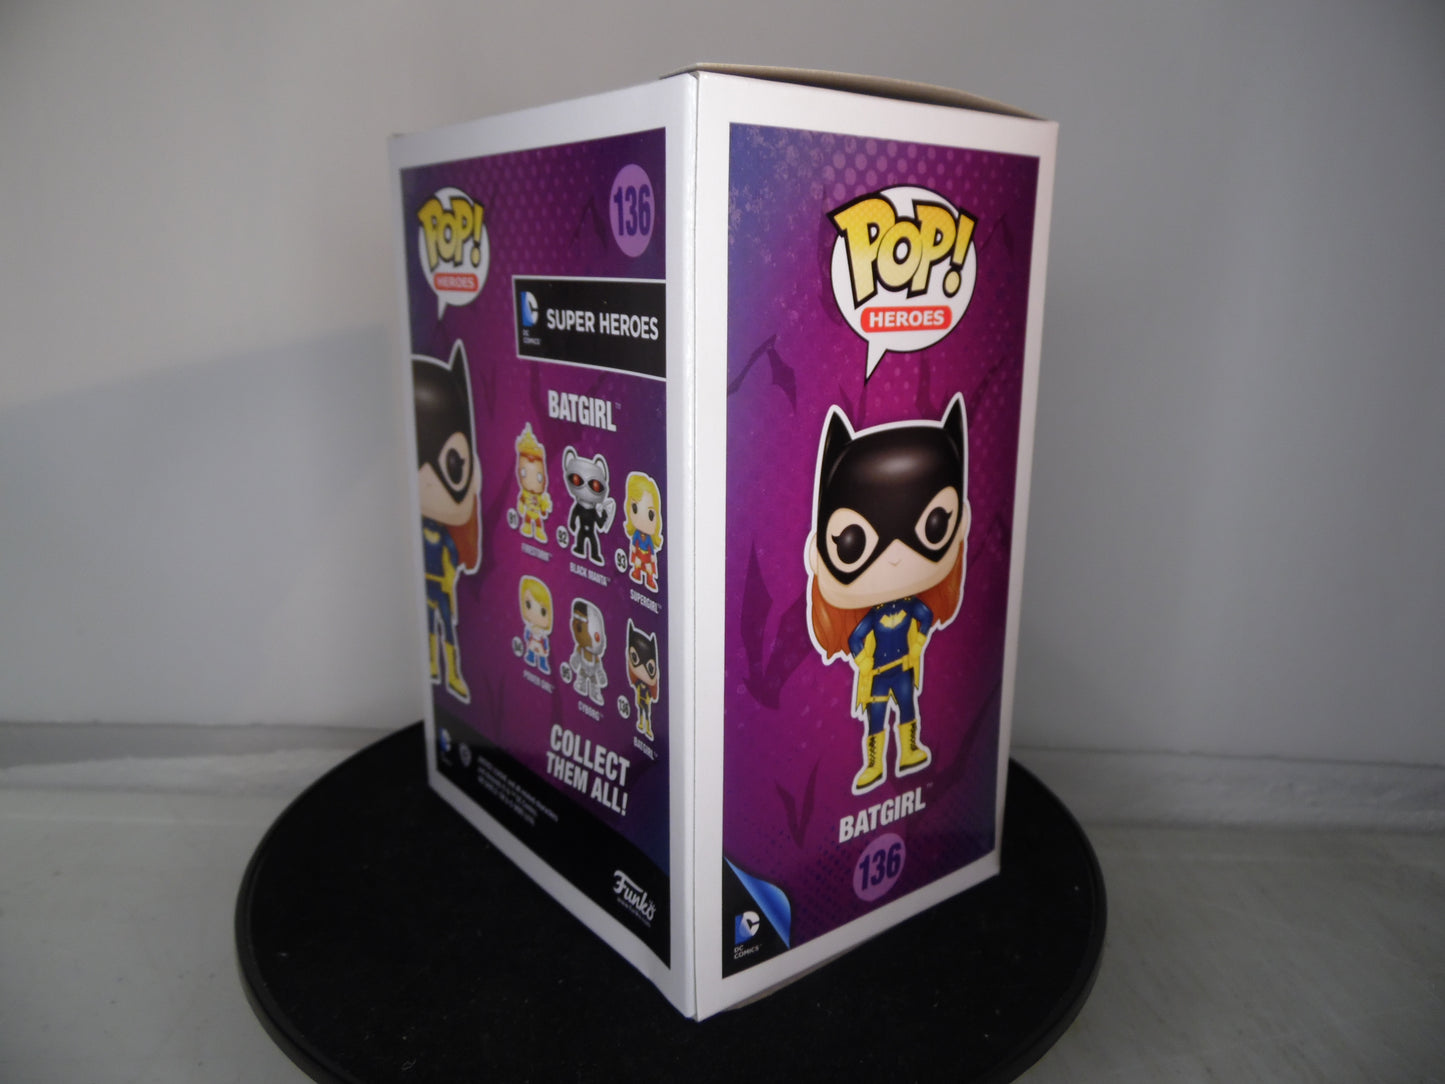 Gotham's New Guardian: Funko Pop DC Superheroes Batgirl (Burnside) #136